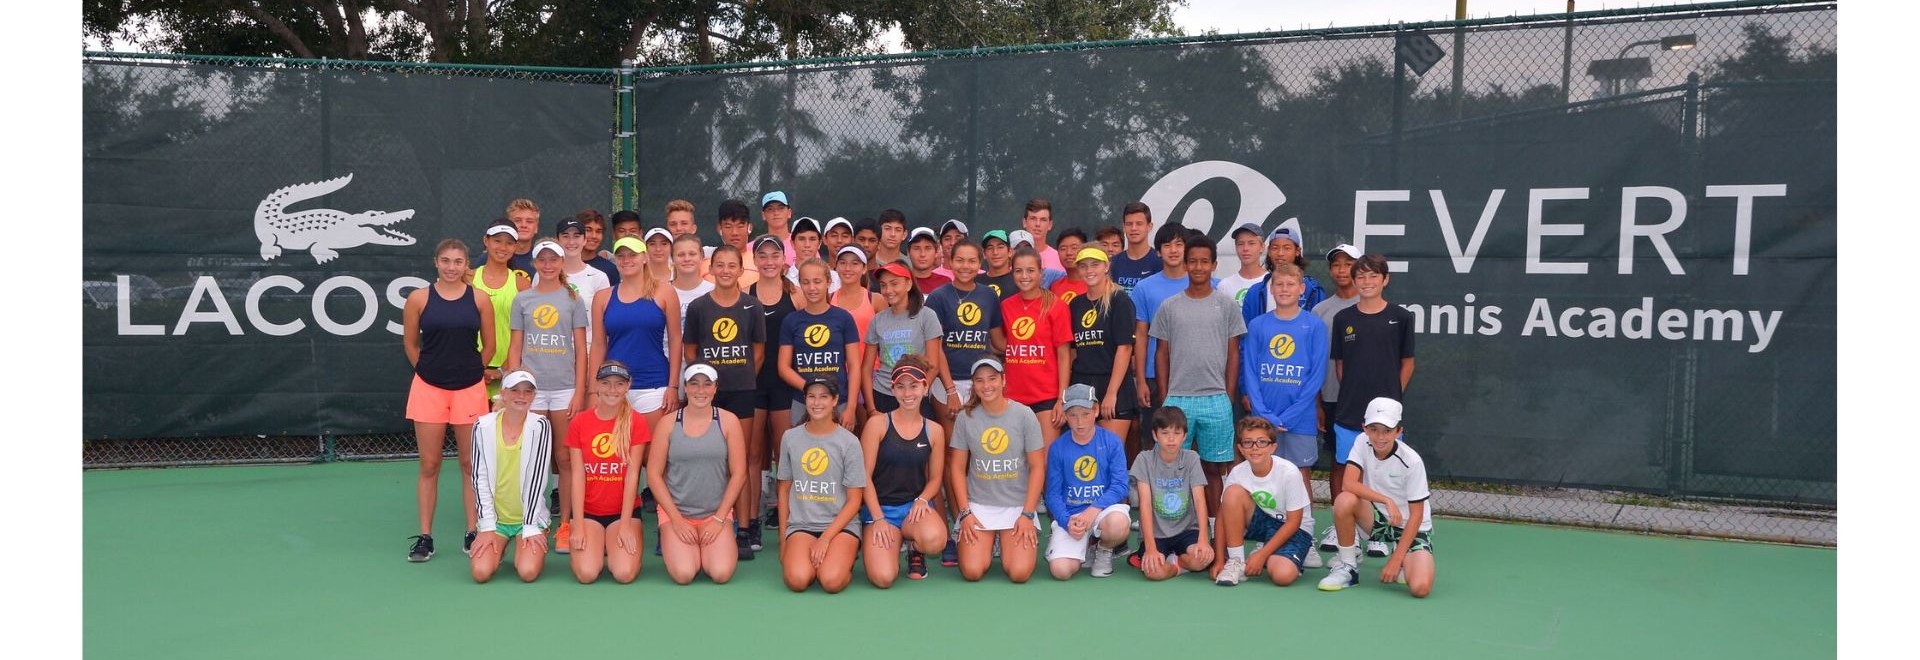 Evert Tennis Academy, Florida - Book. Travel. Play.